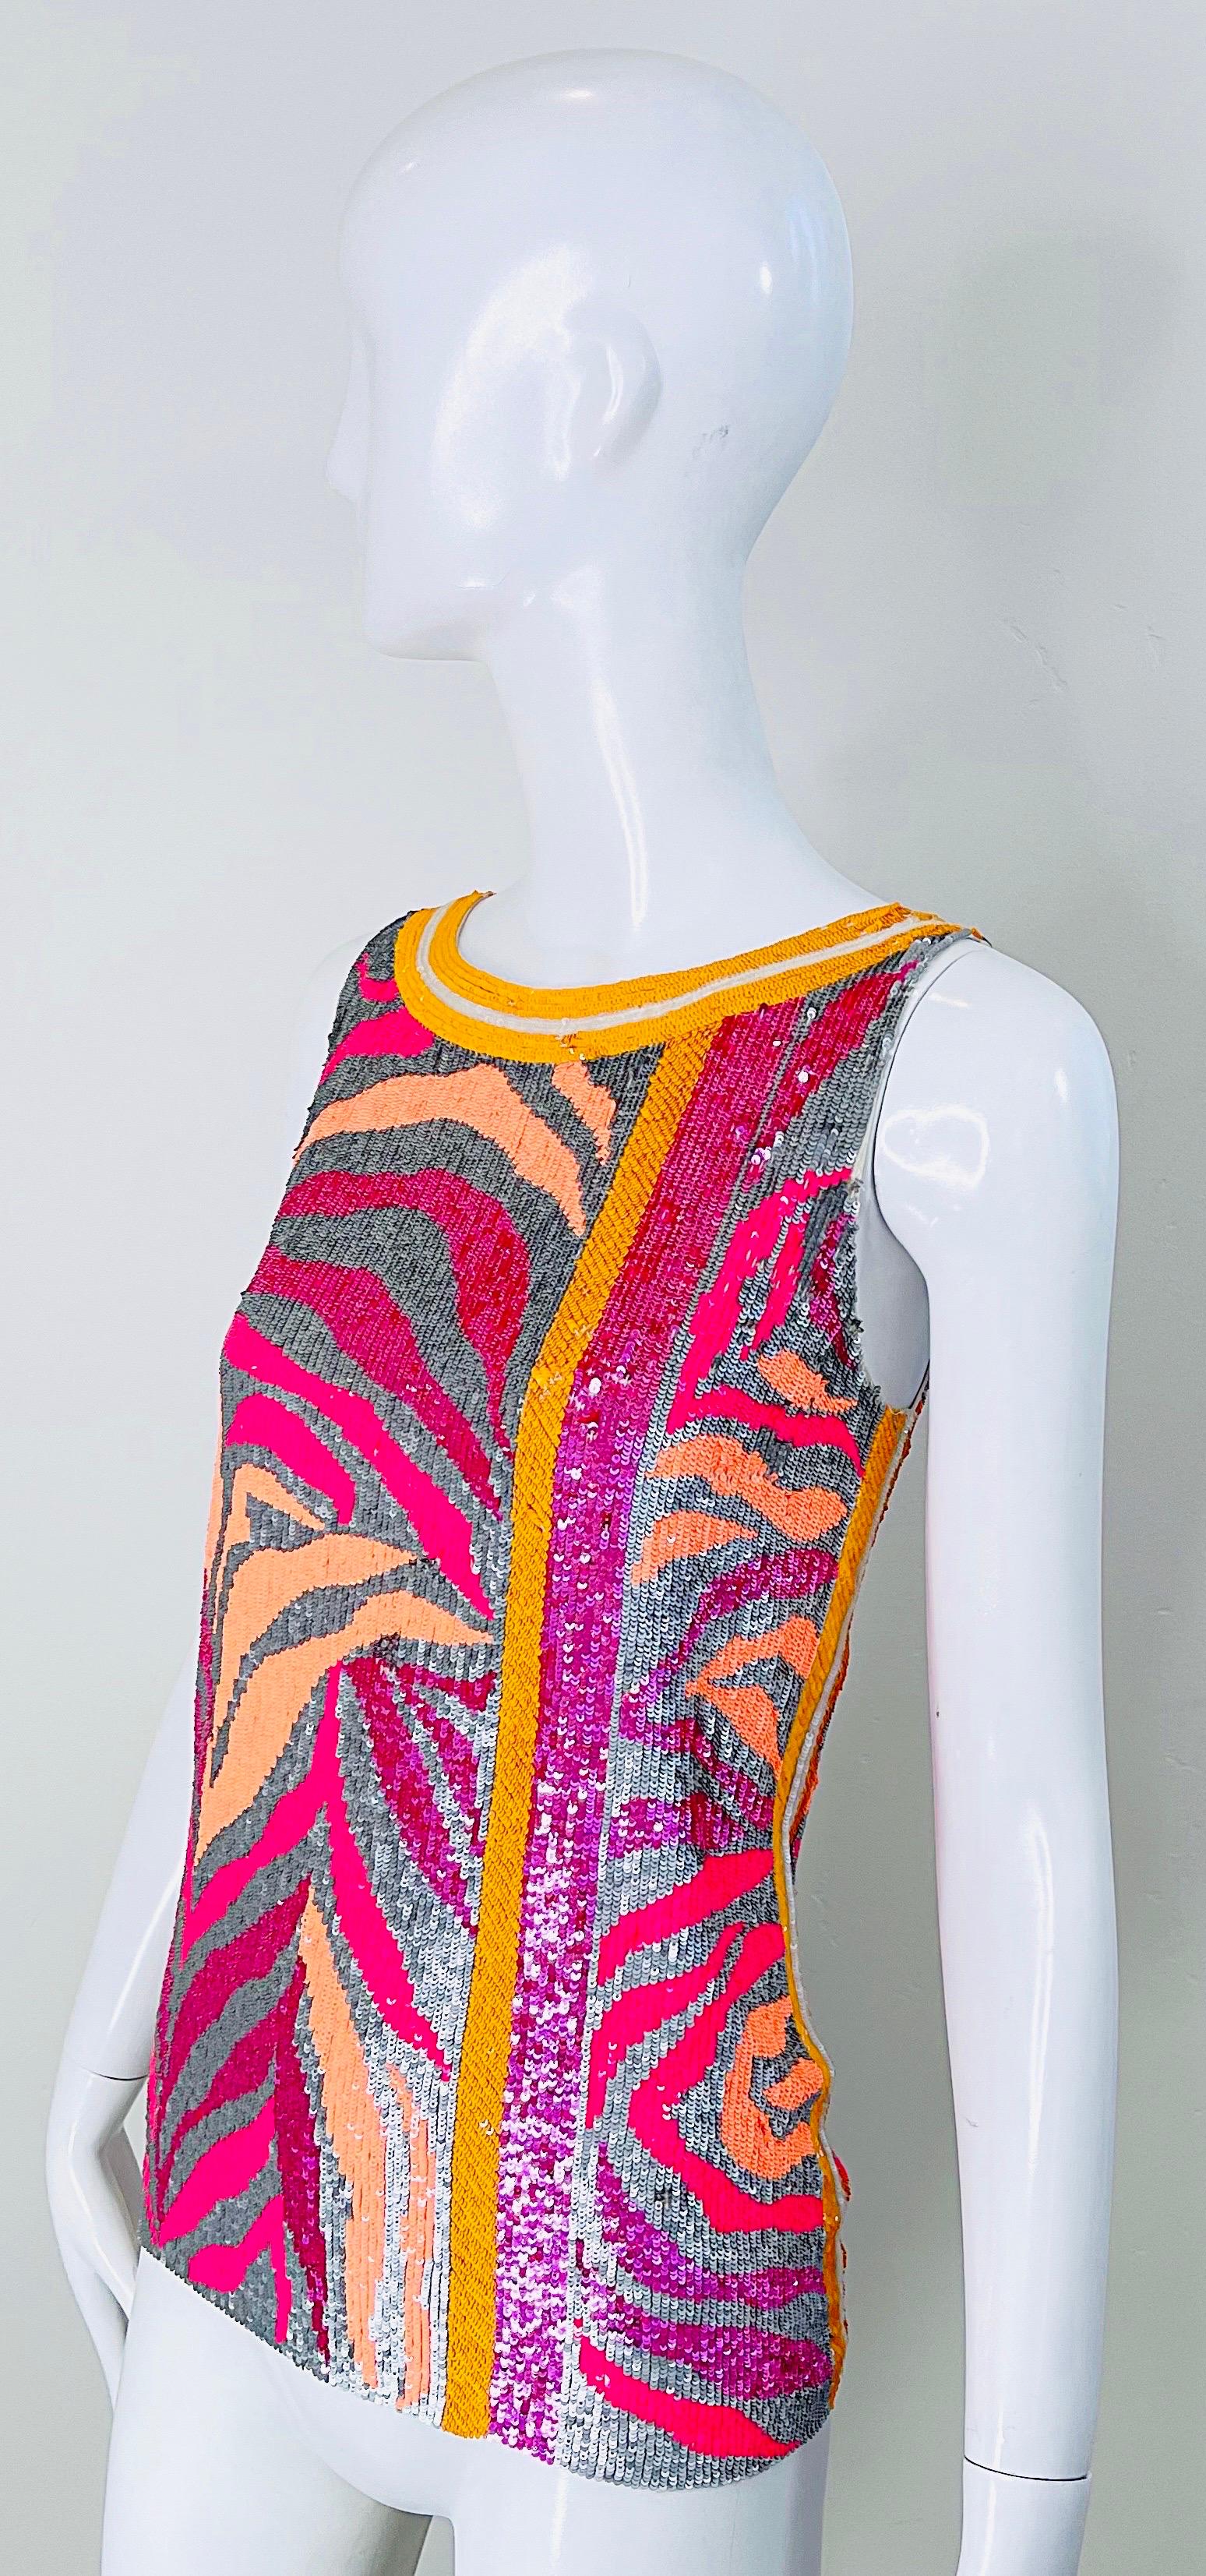 NWT Blumarine Couture Runway Spring 2008 Size 6 Sequin Pink Orange Zebra Top For Sale 8